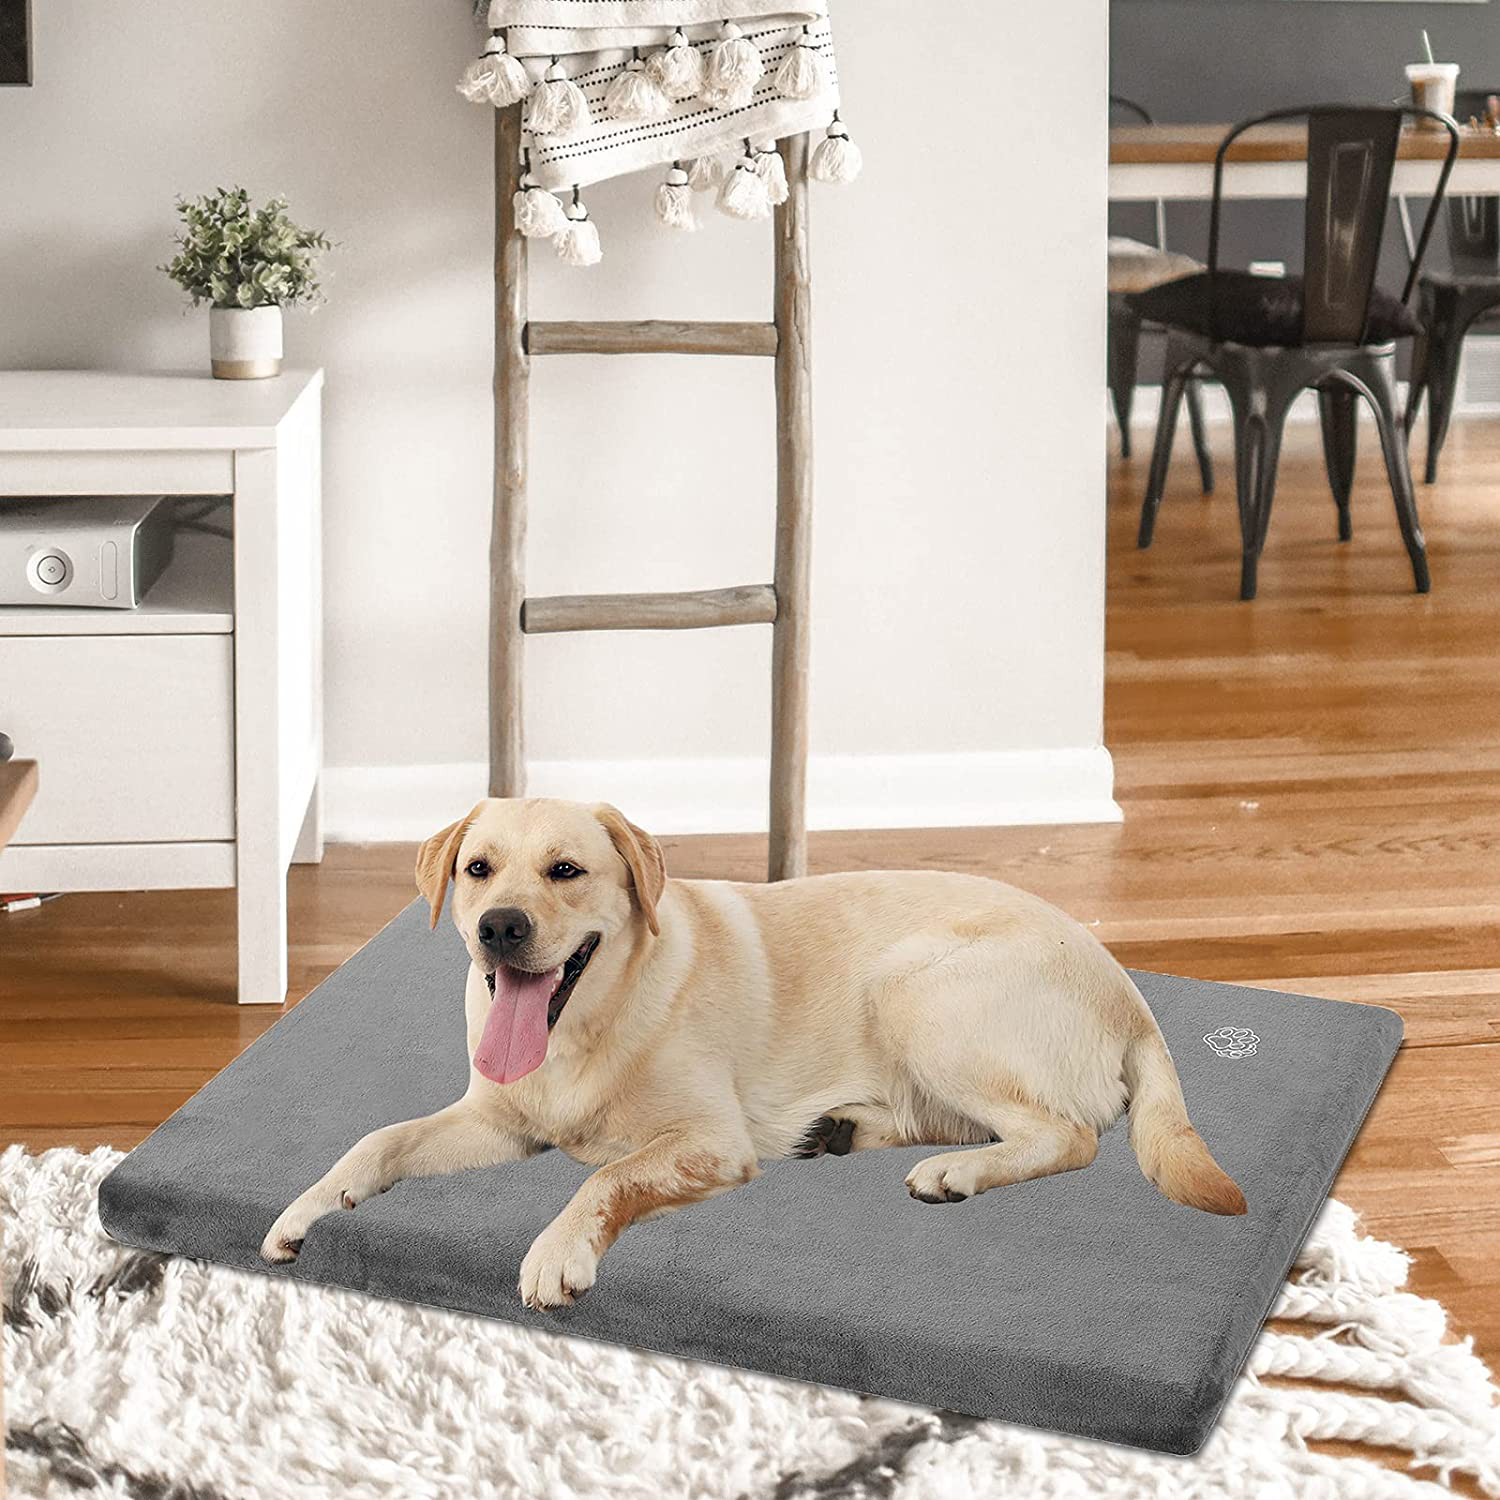 EMPSIGN Fancy Dog Bed Mat, Pet Bed Pad Reversible (Warm & Cool